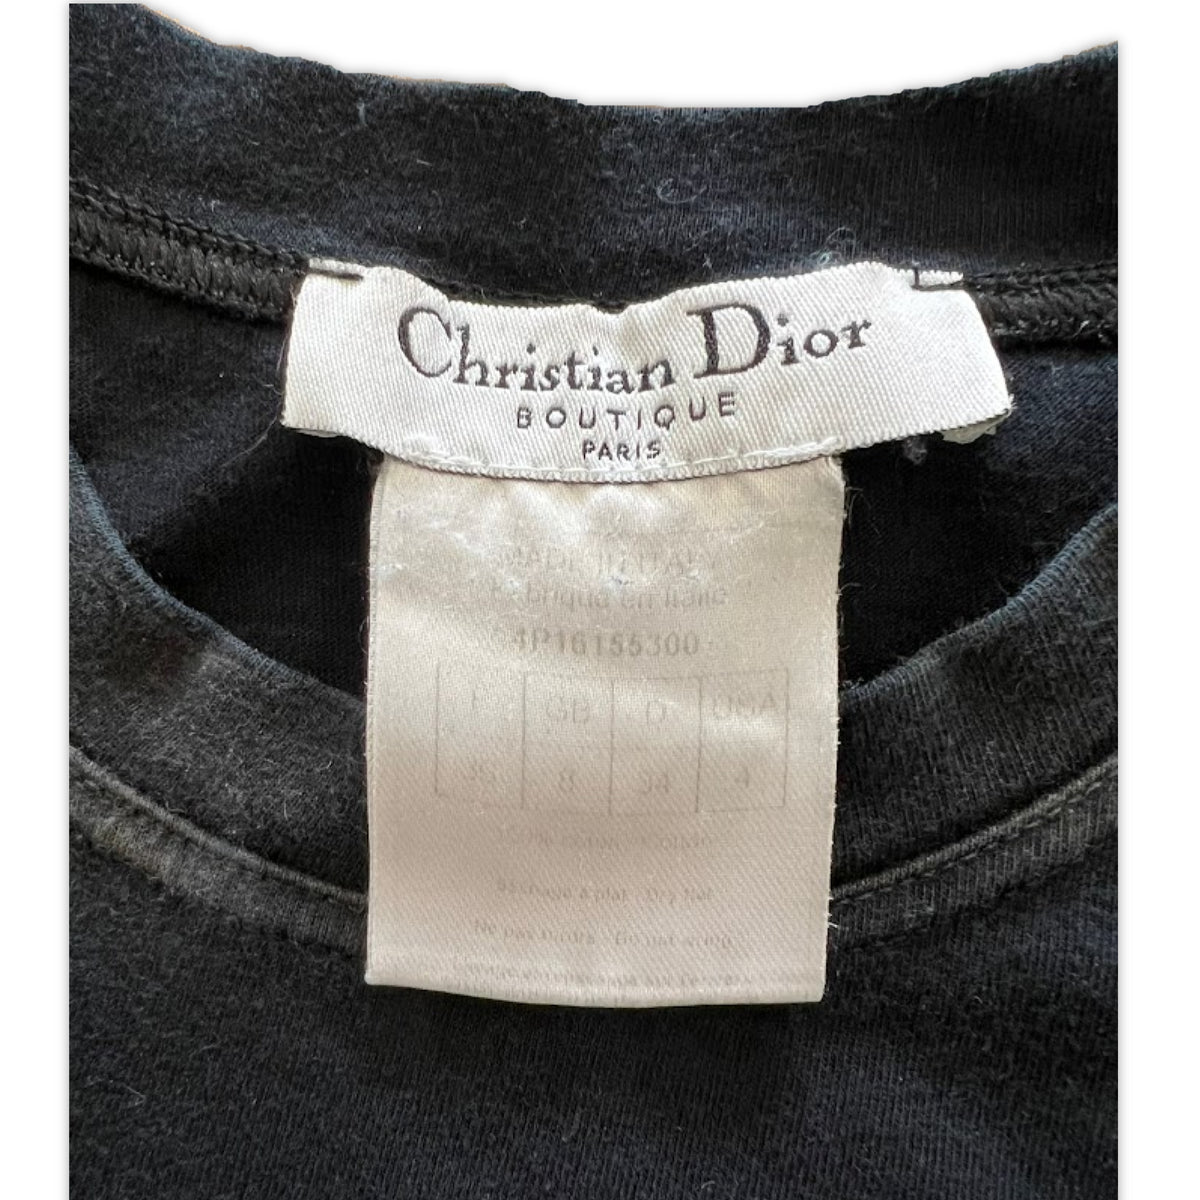 DIOR "J'adore Dior" Black Tank Top| Size US 4